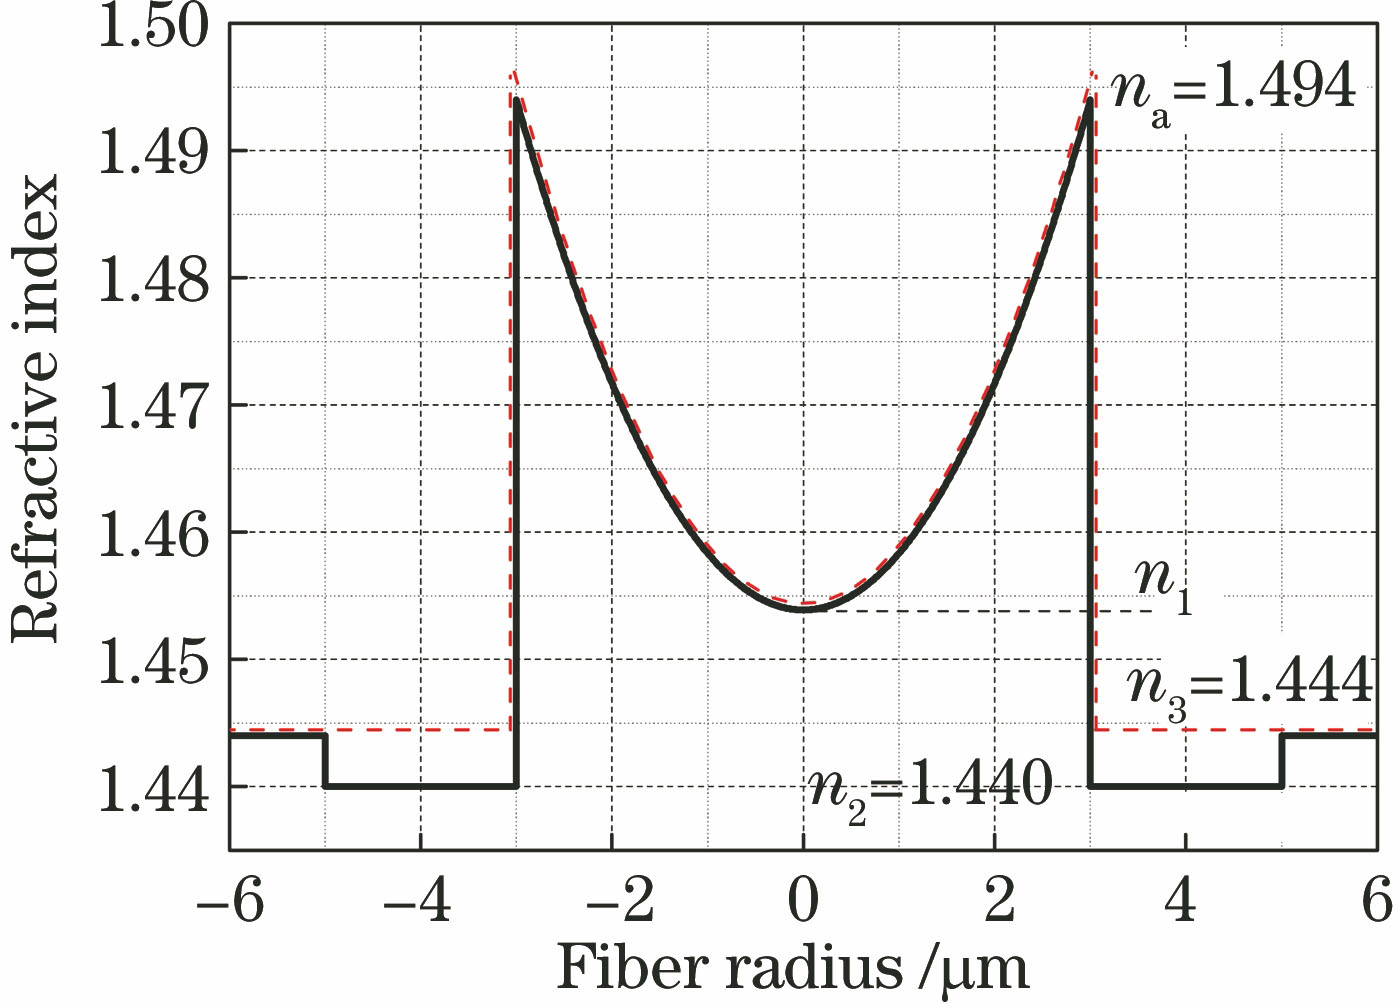 Refractive index profile of improved fiber structure